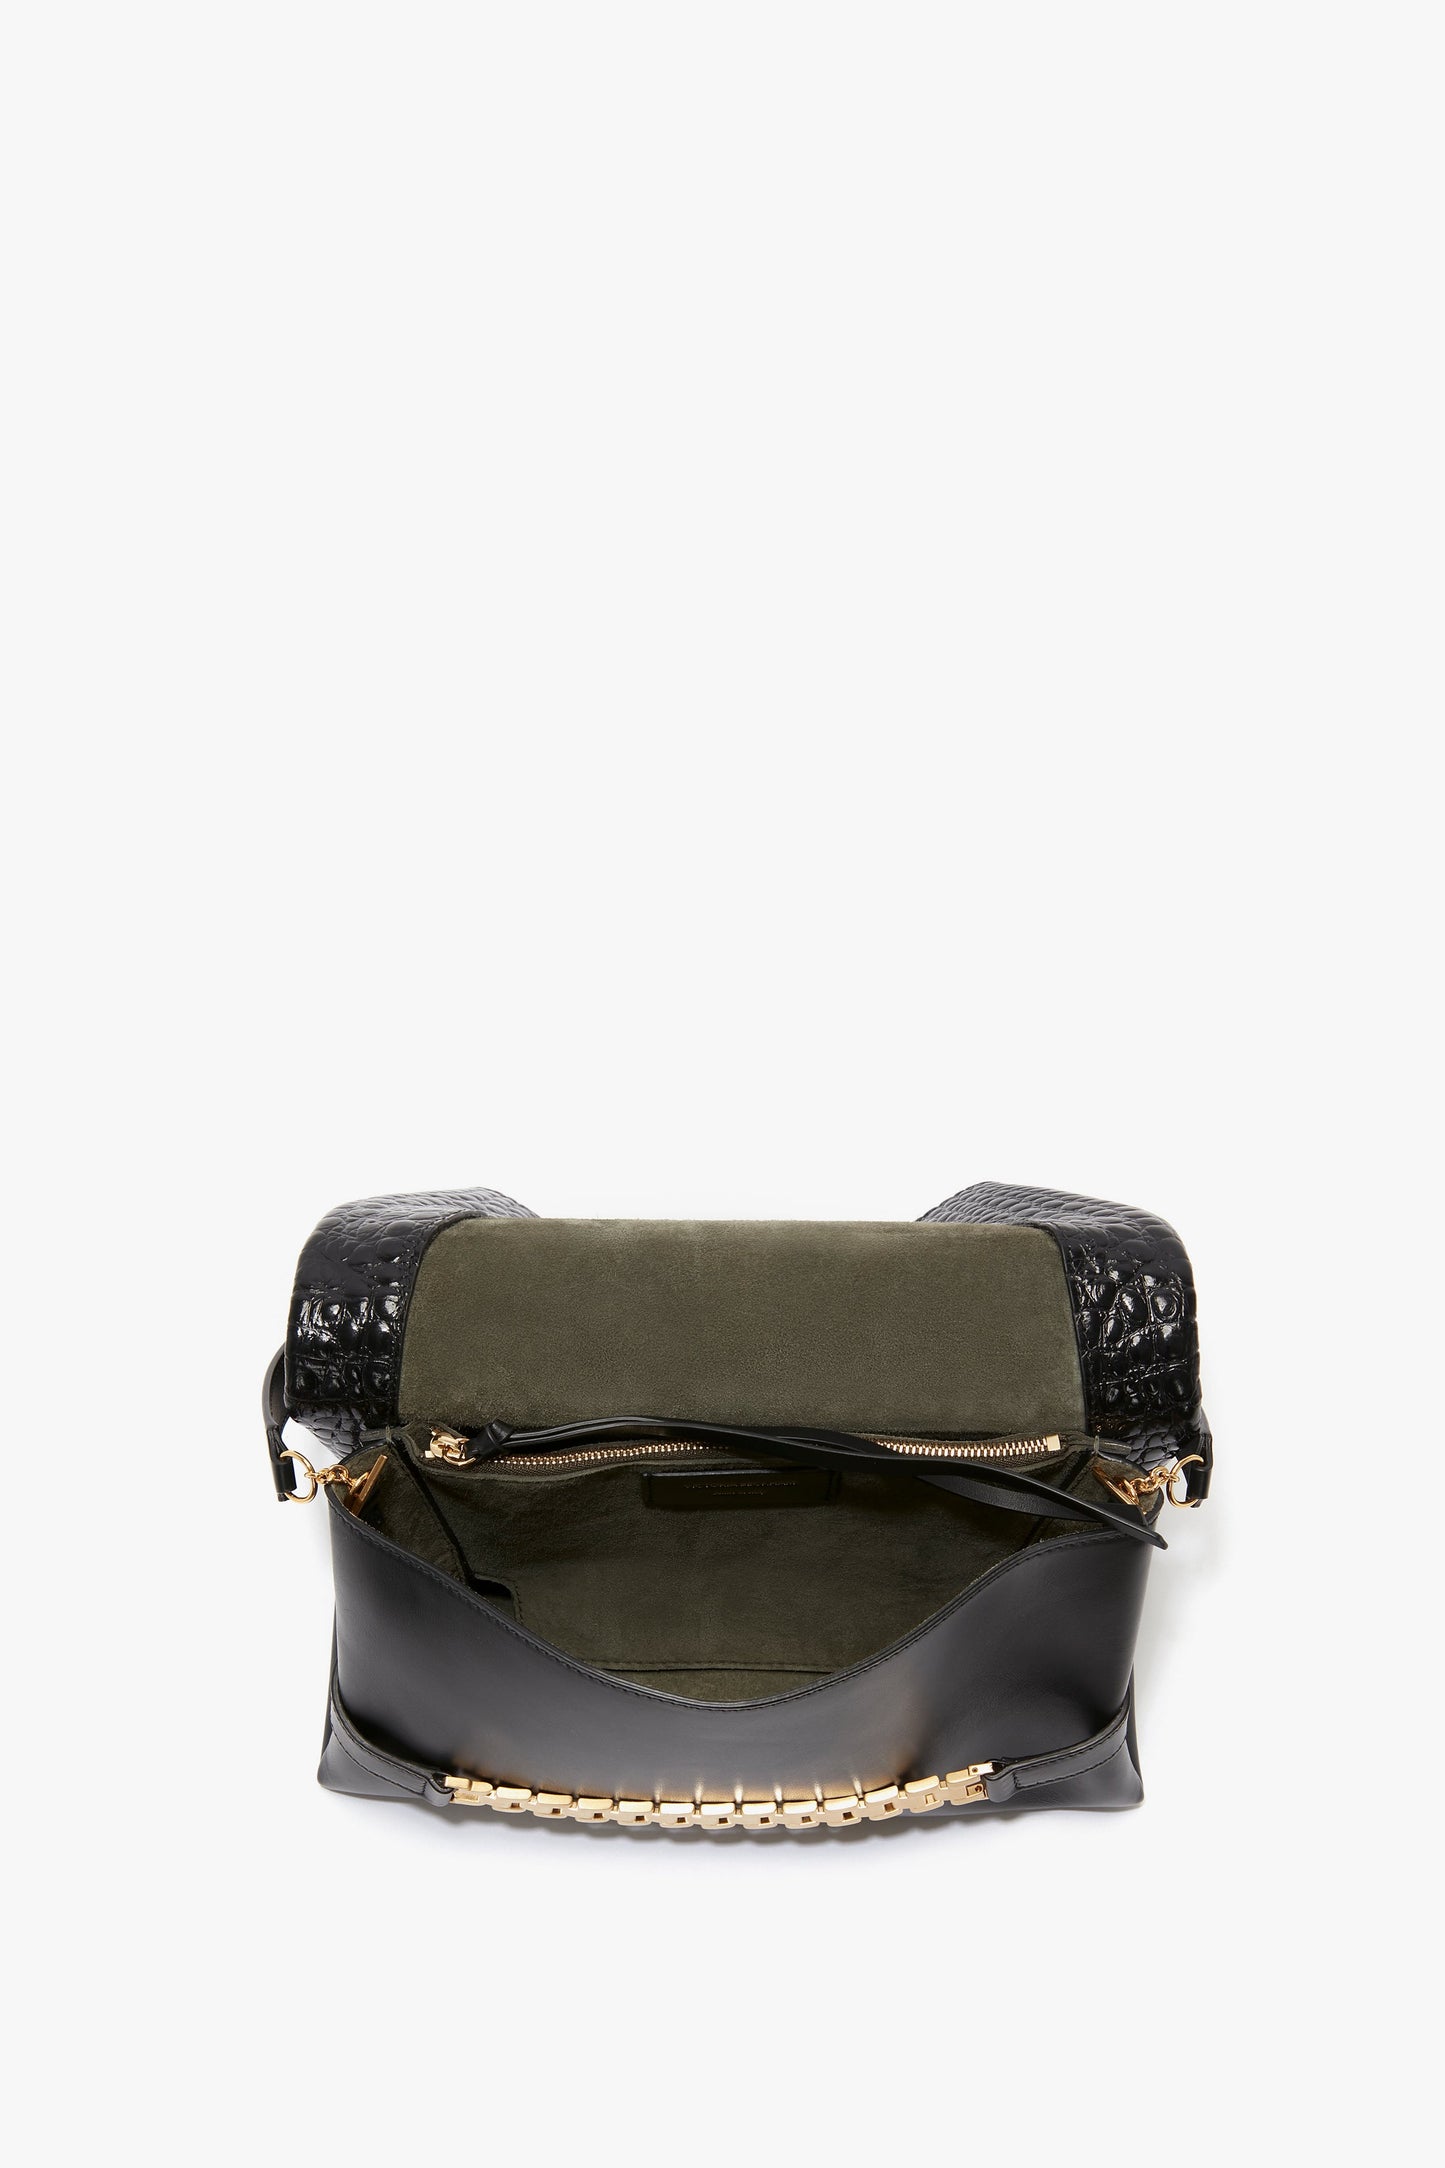 Victoria Beckham Large Chain Pouch Leather Shoulder Bag